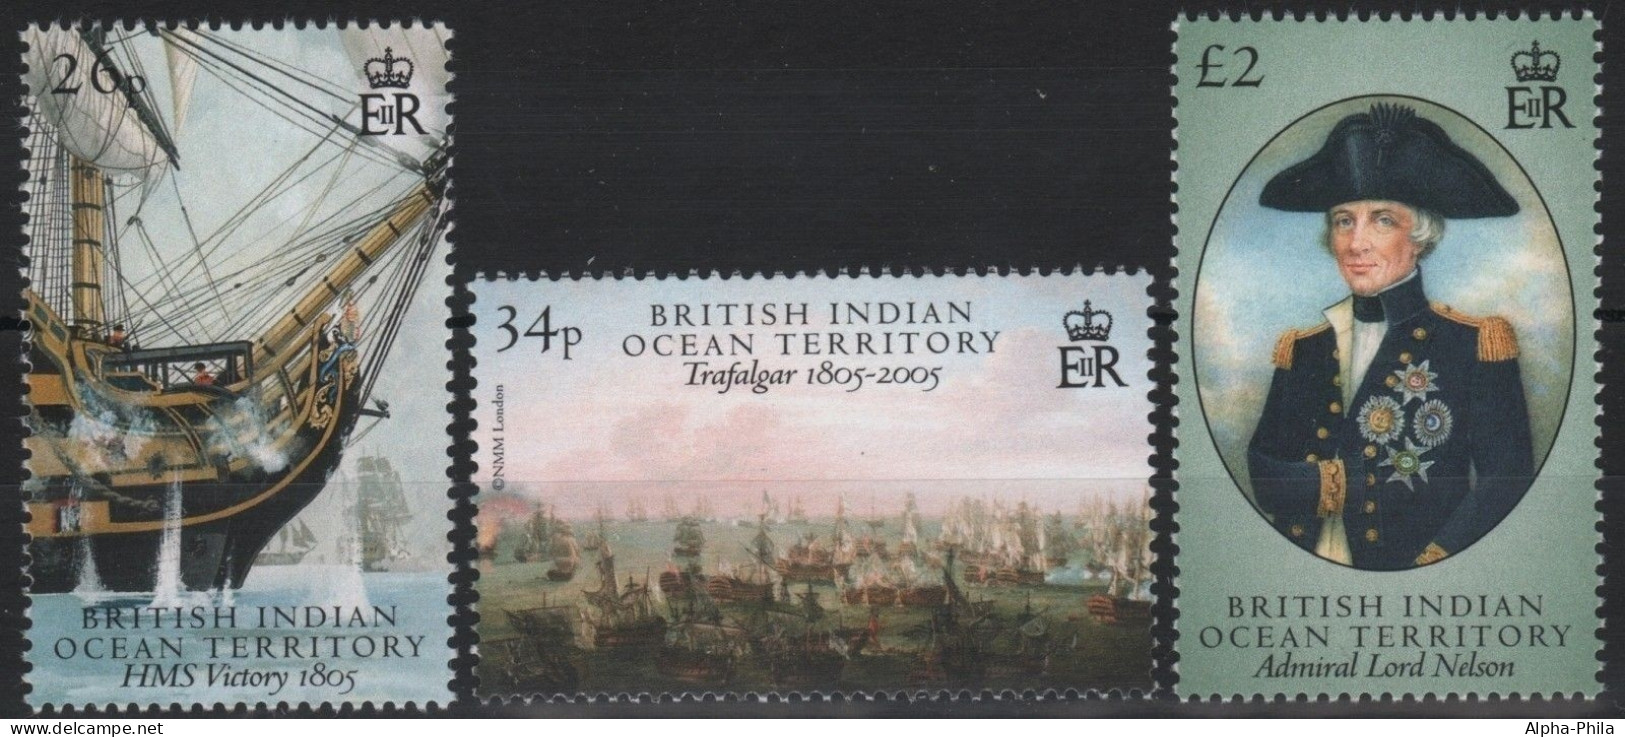 BIOT 2005 - Mi-Nr. 389-391 ** - MNH - Schiffe / Ships - British Indian Ocean Territory (BIOT)